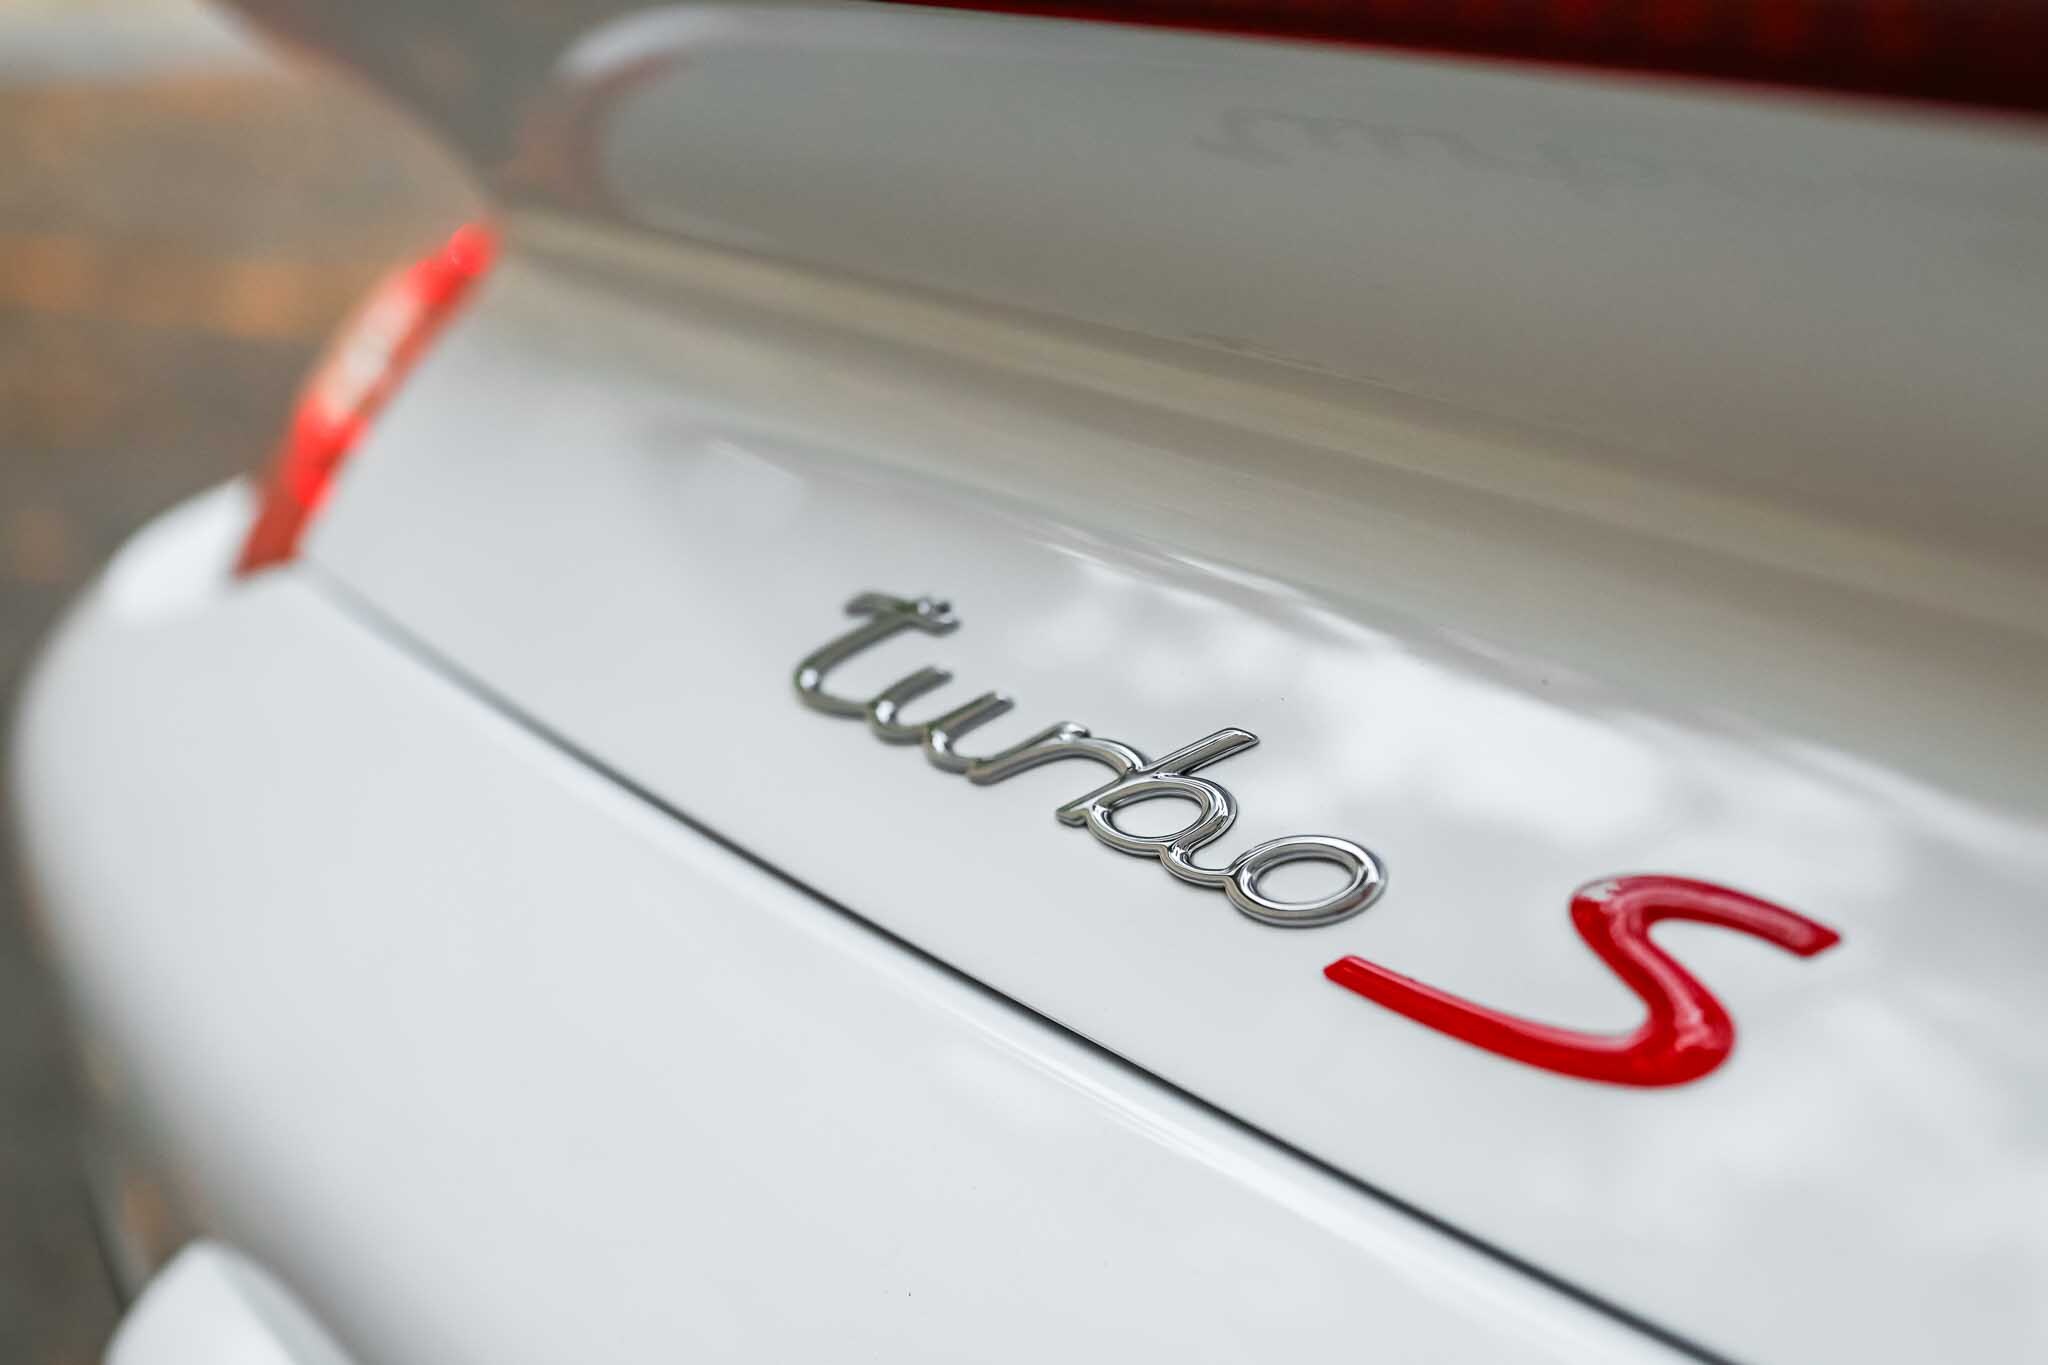 Used 2012 Porsche 911 Turbo S For Sale near Avon, CT - WP0AD2A91CS766345